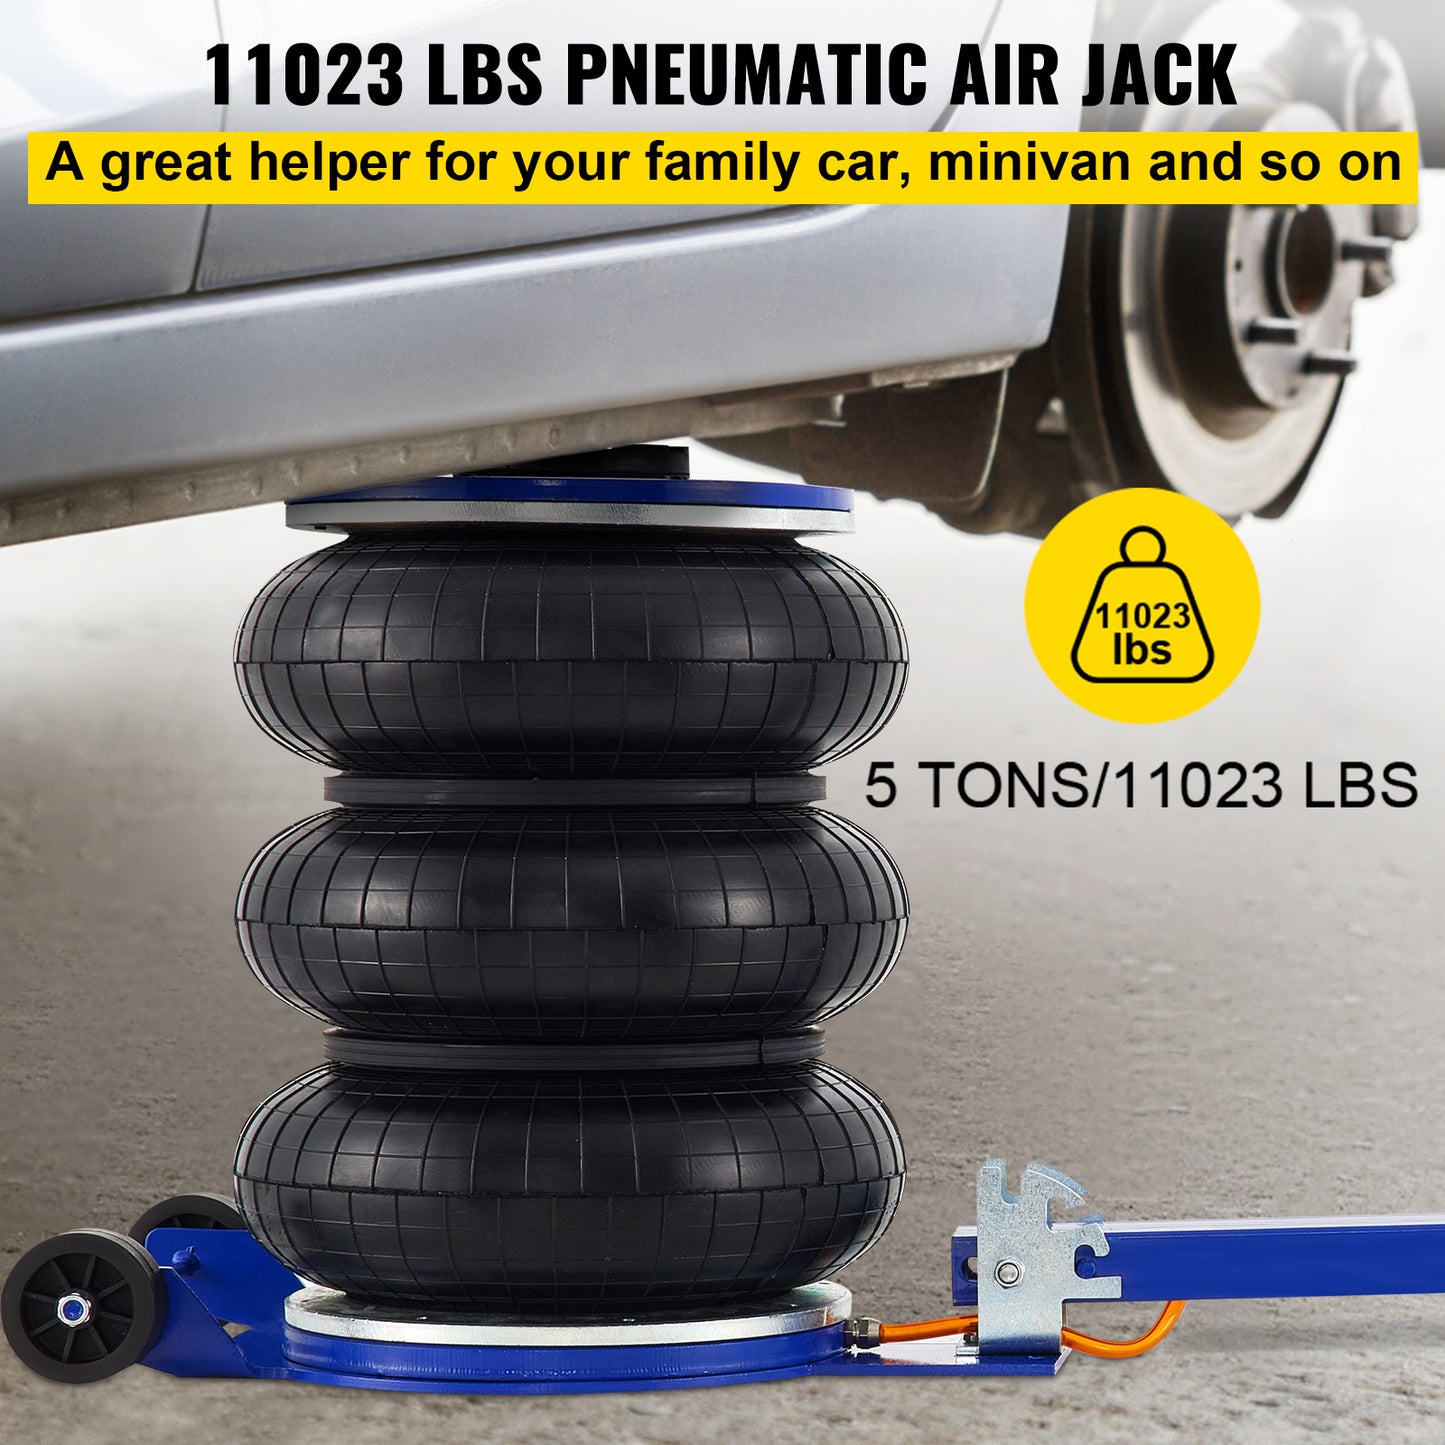 Pneumatic Triple Bag Car Jack 5T with Fast Lifting (16"/40cm) - Automotive